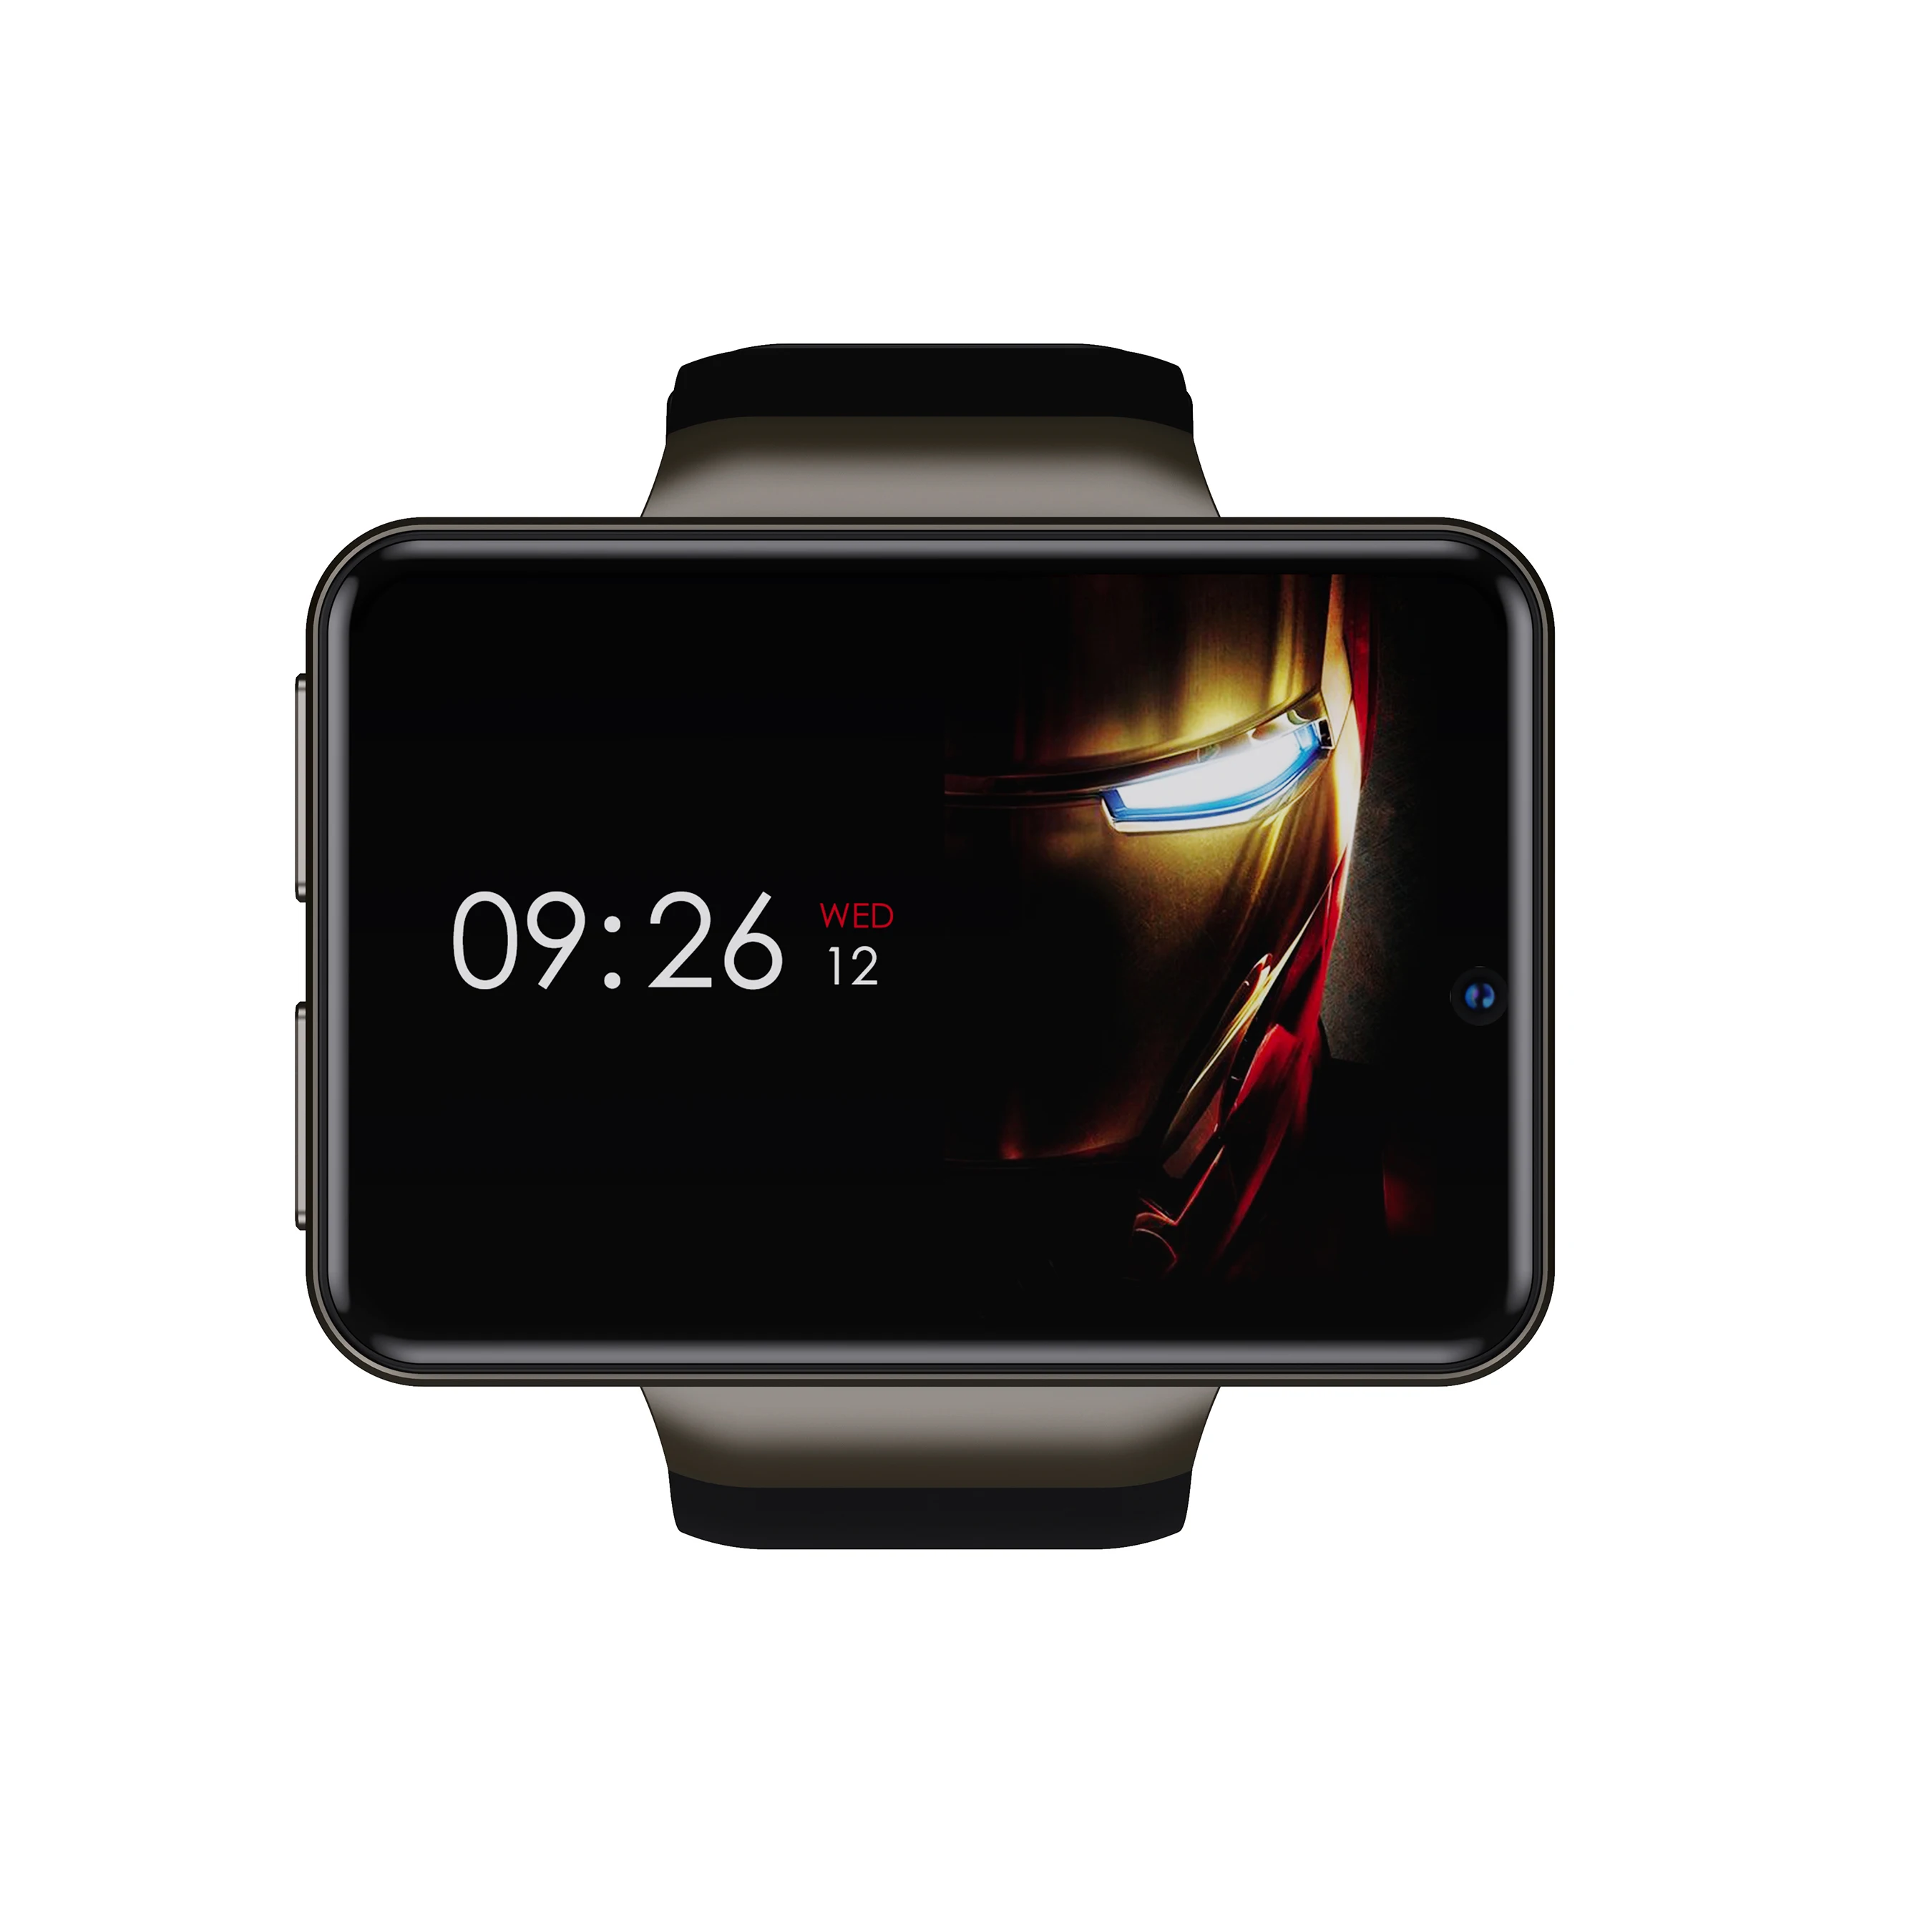 

DM101 4G Smart Watch 2.4G+5G WiFi BT Smartwatch 2.41 inch Touch Screen Android 7.1 3GB+32GB Dual Camera 5MP+2MP smartwatch DM100